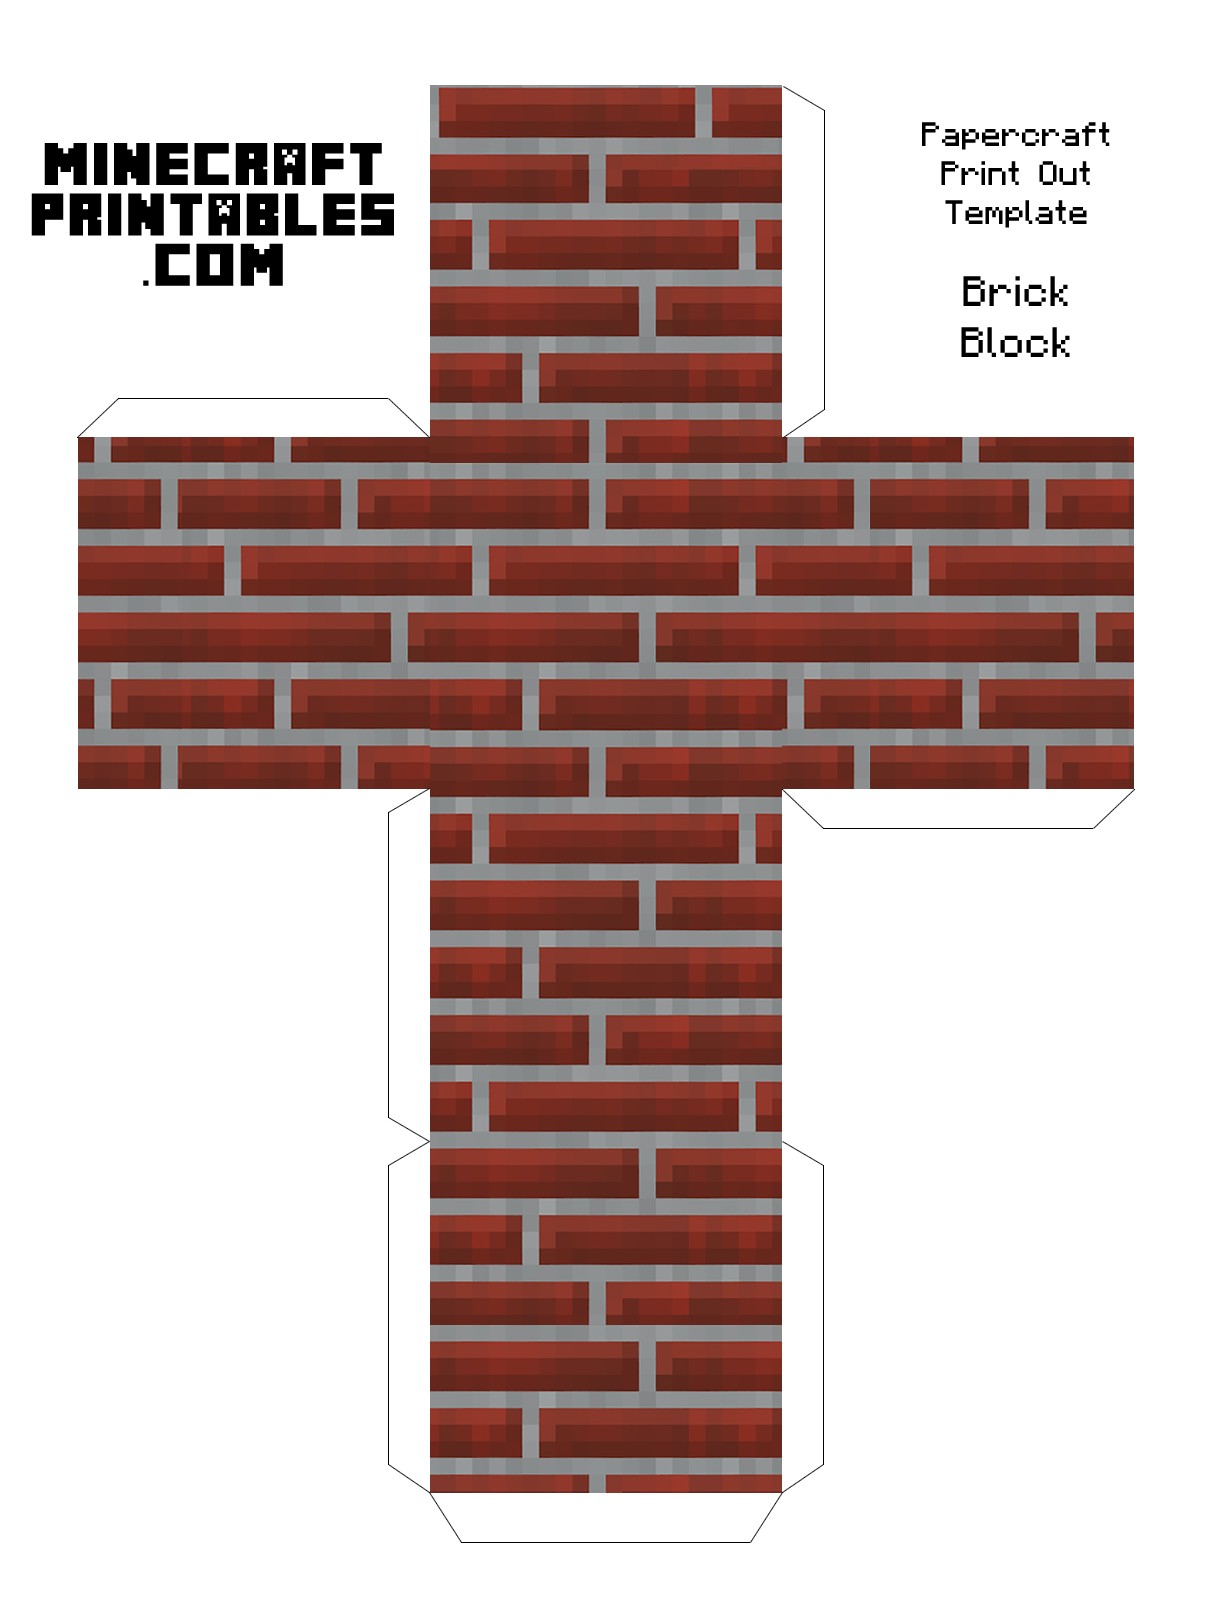 Buy Minecraft Papercraft Brick Block Minecraft Party Pinterest